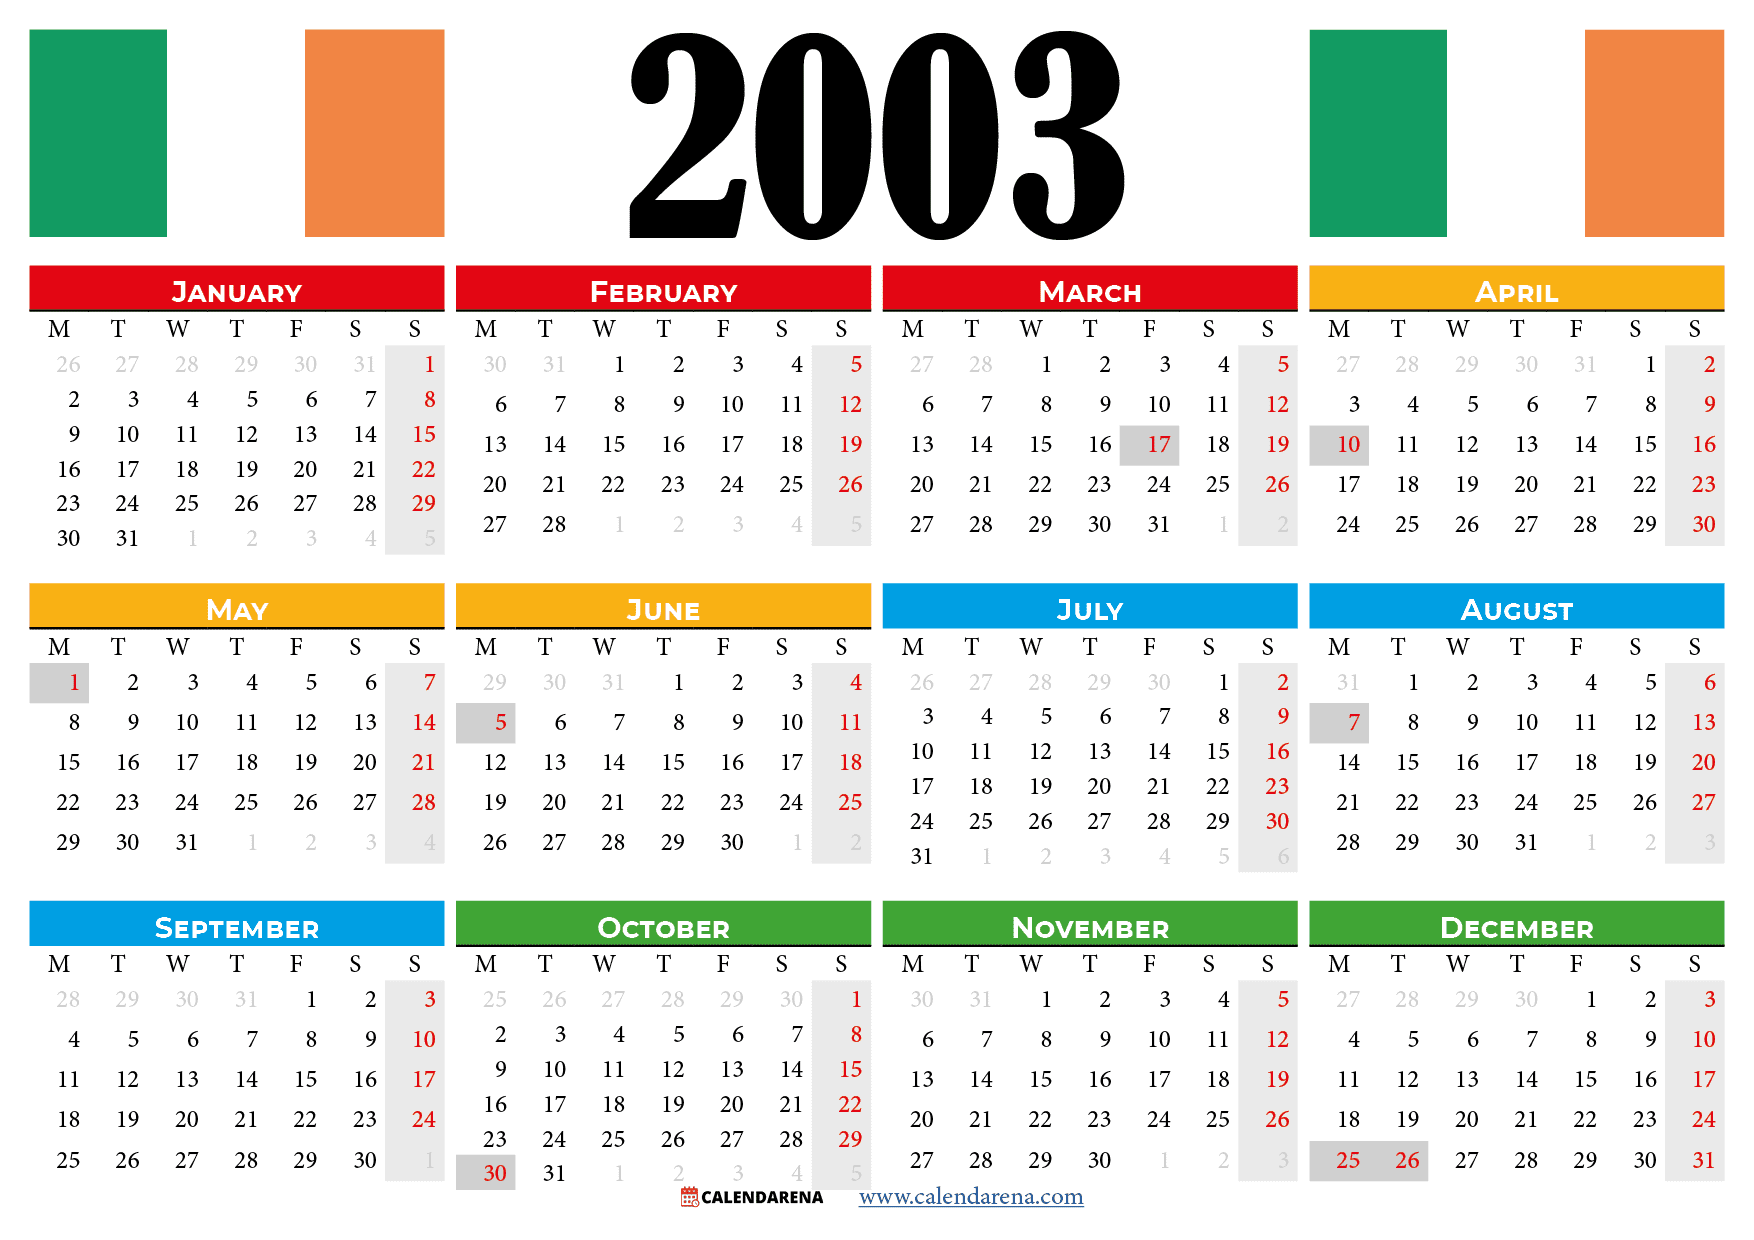 Ireland Bank Holidays 2023